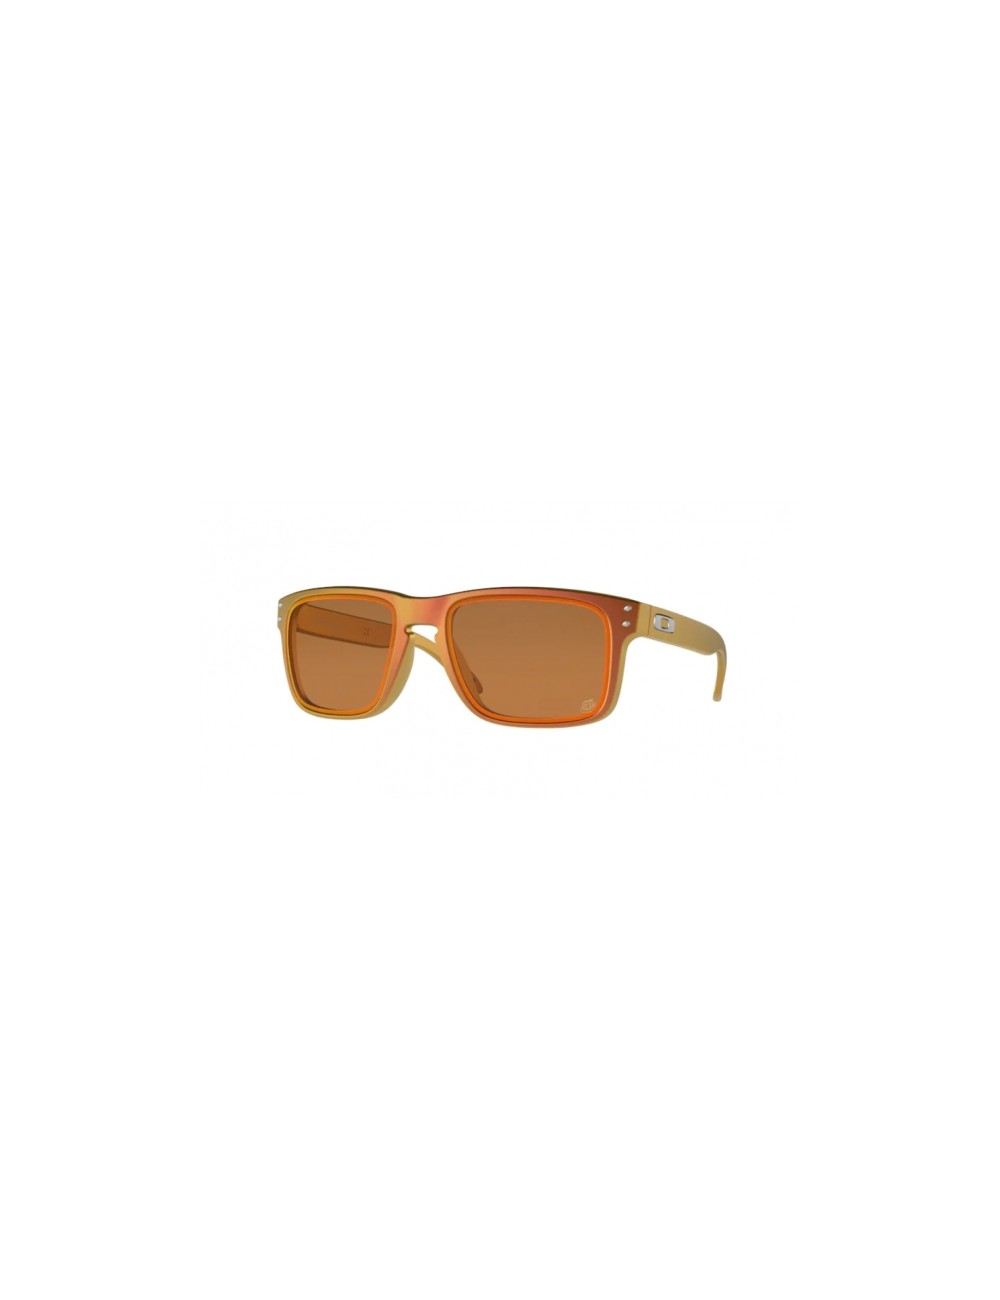 Oakley Holbrook Sunglasses - TroyLee Designs_13548